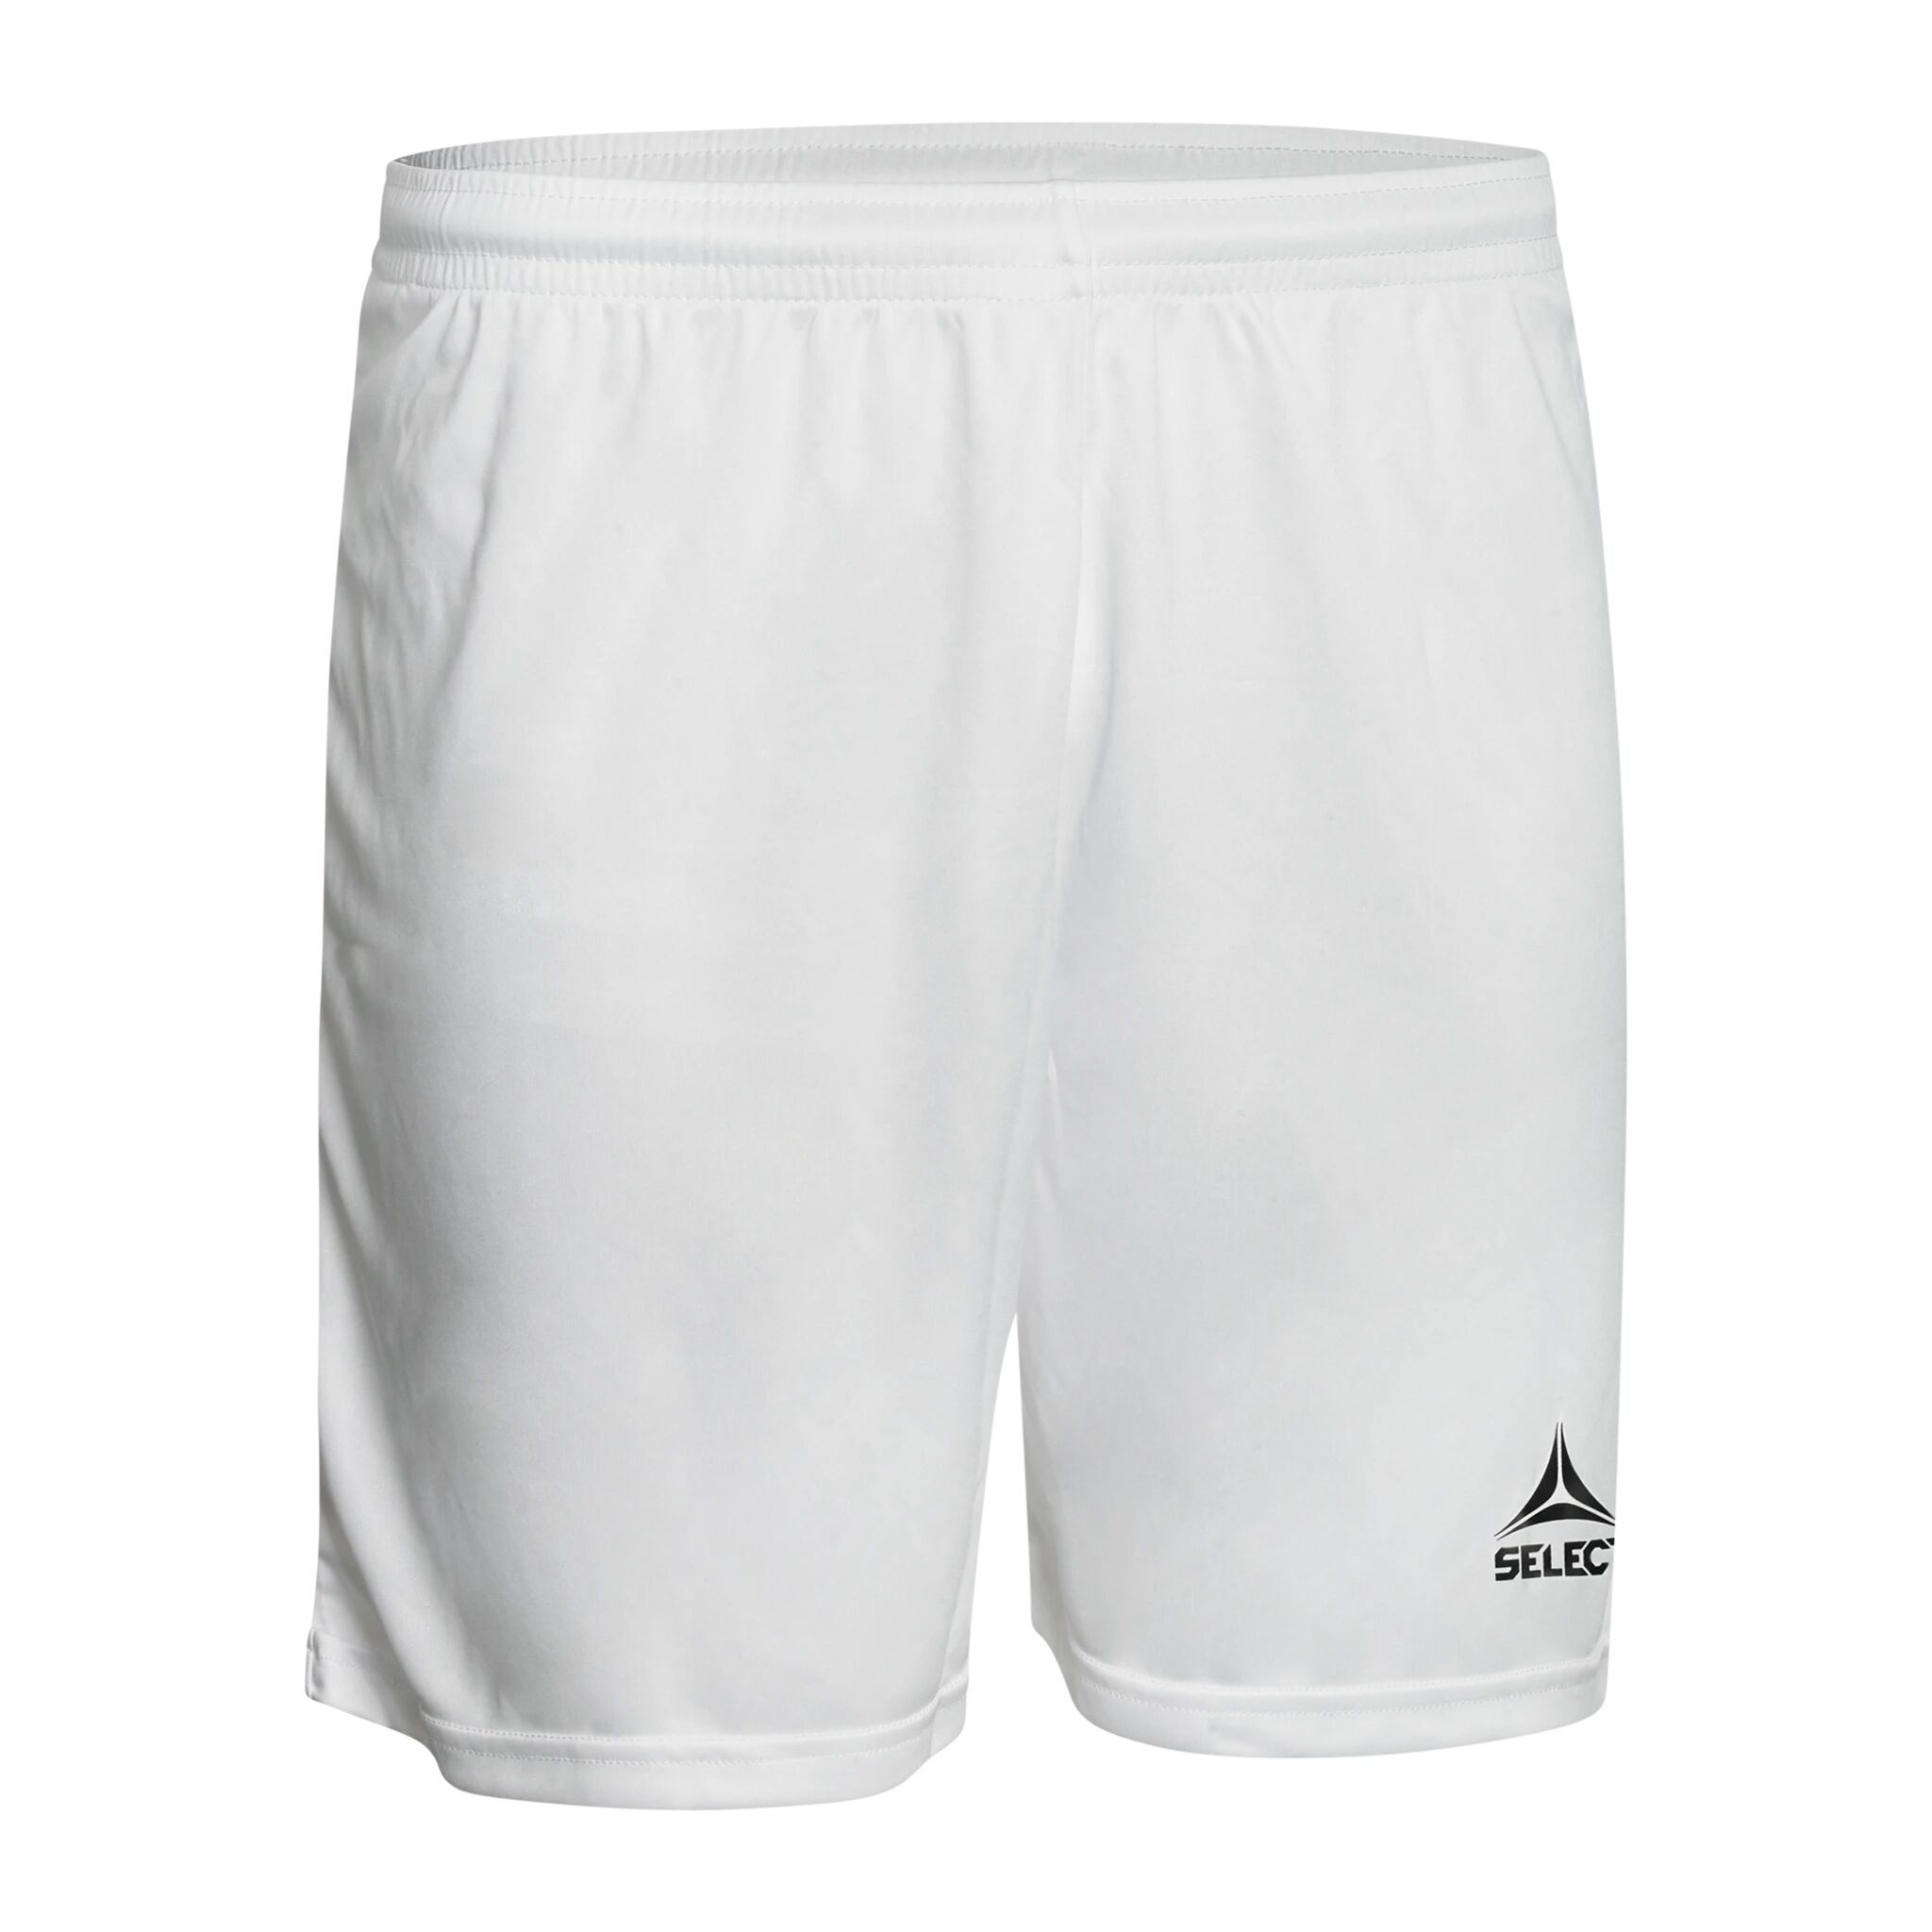 Select Player shorts Pisa, shorts senior 164 White